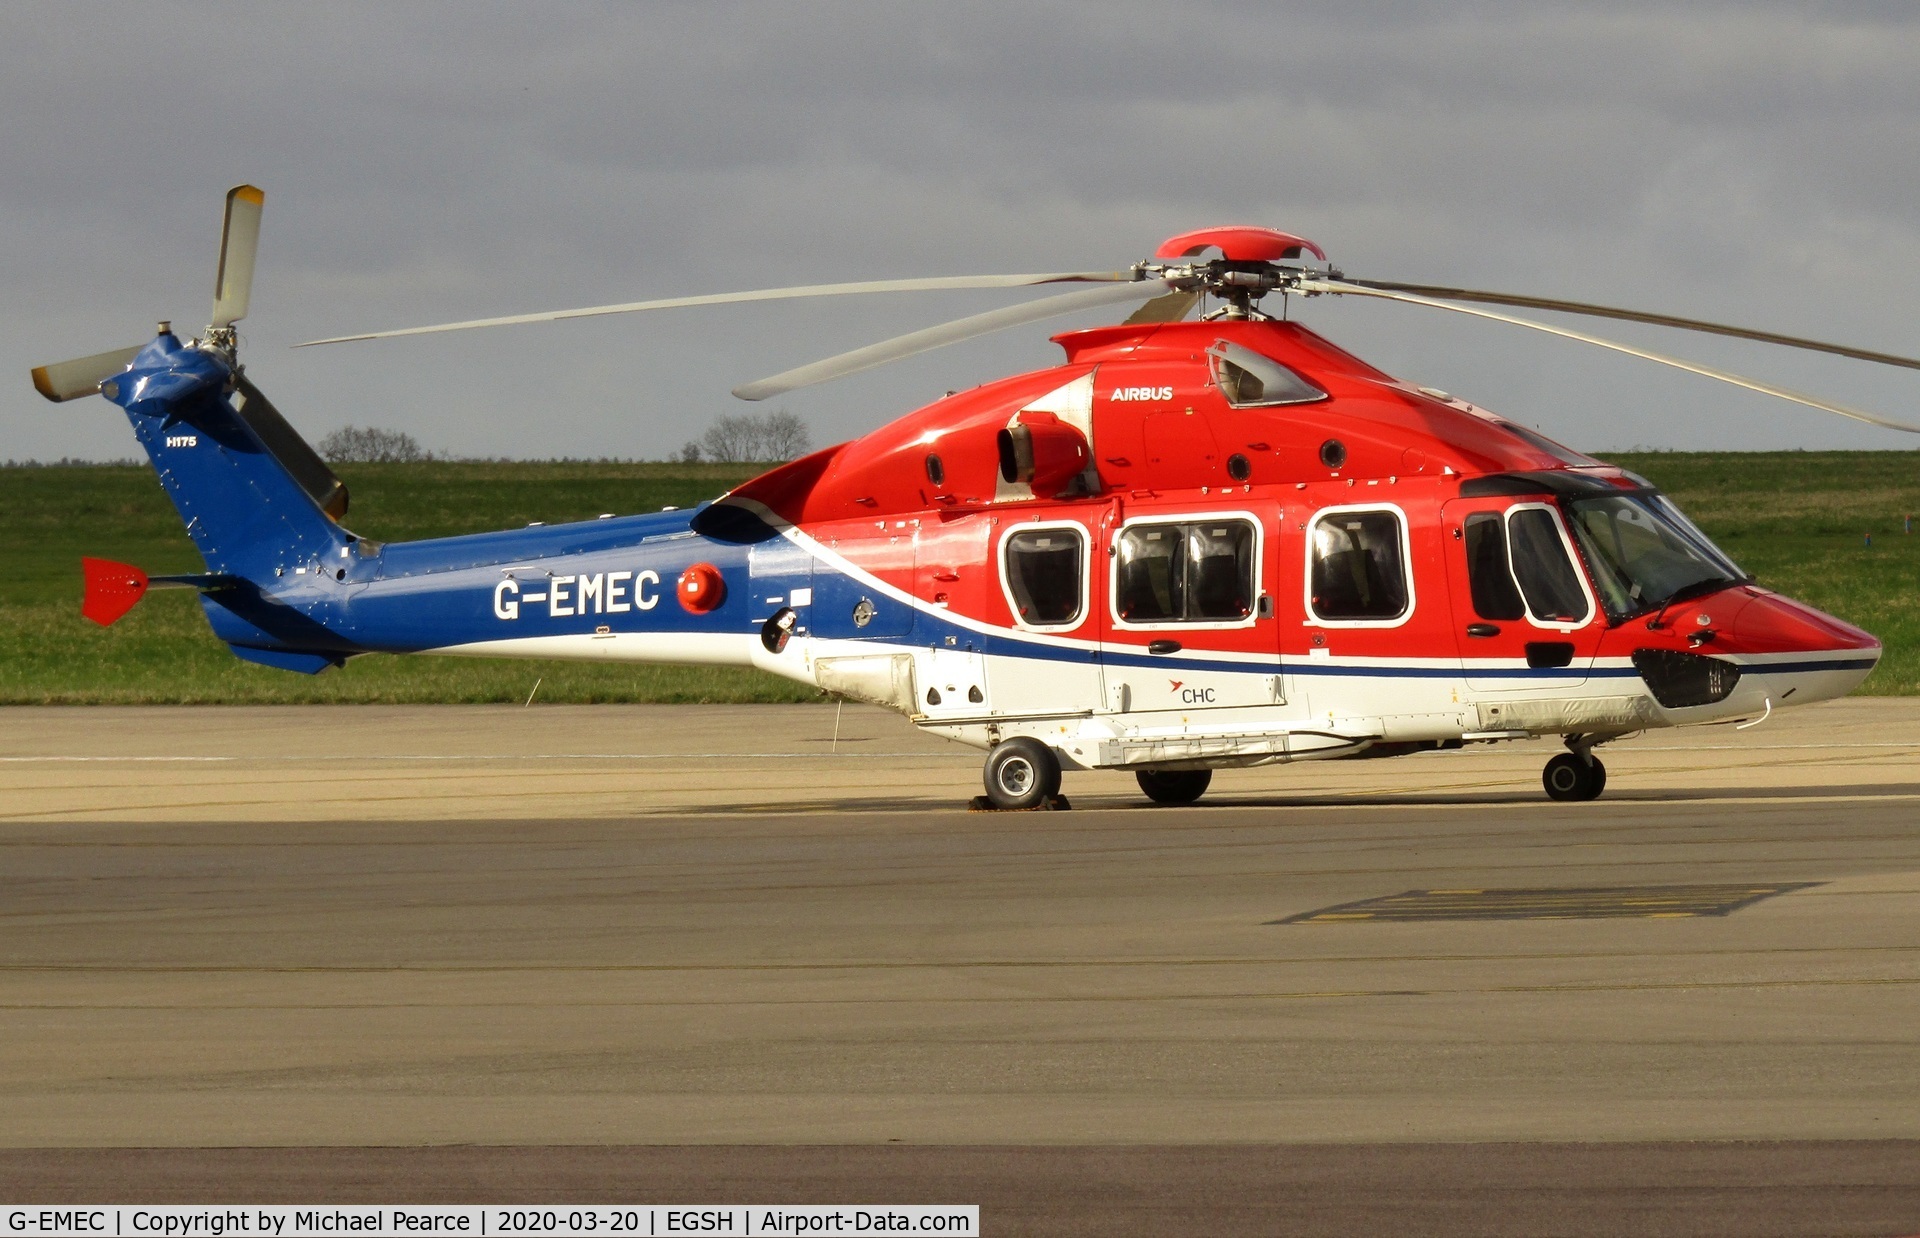 G-EMEC, 2018 Airbus Helicopters EC-175B C/N 5031, Parked on the SaxonAir ramp awaiting its next flight.